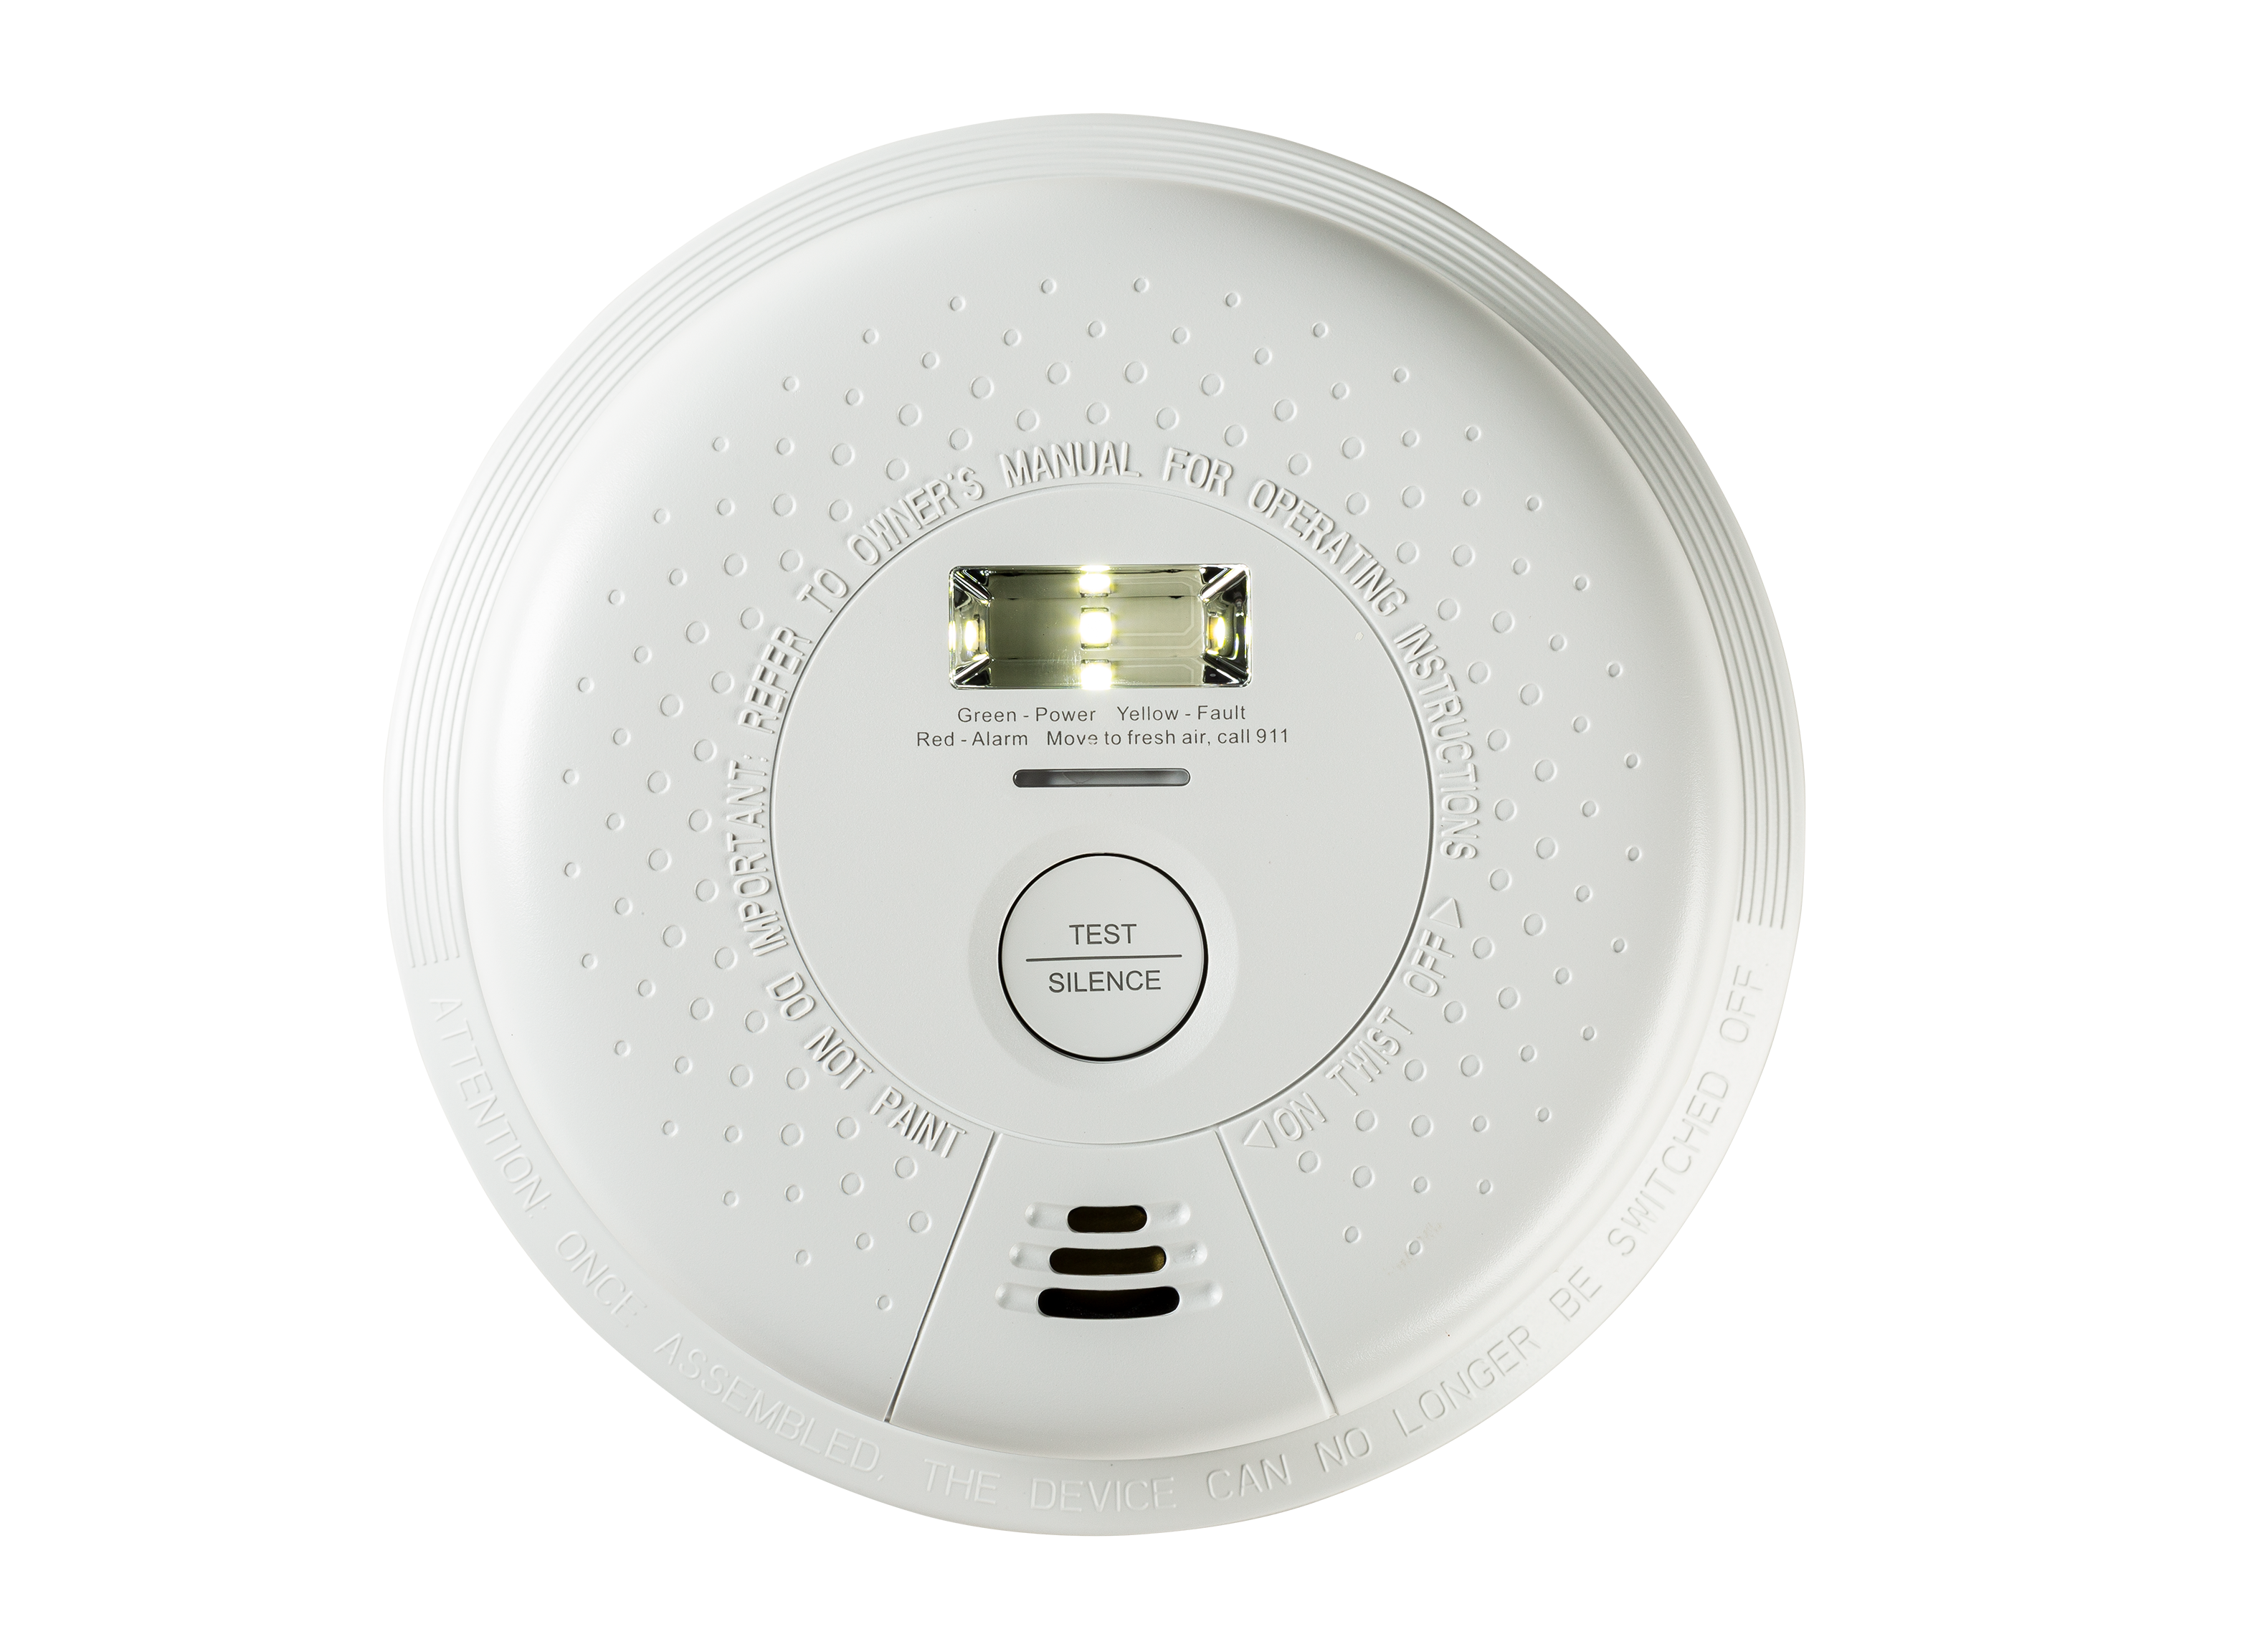 X-Sense SD01 Smoke & Carbon Monoxide Detectors Review - Consumer Reports